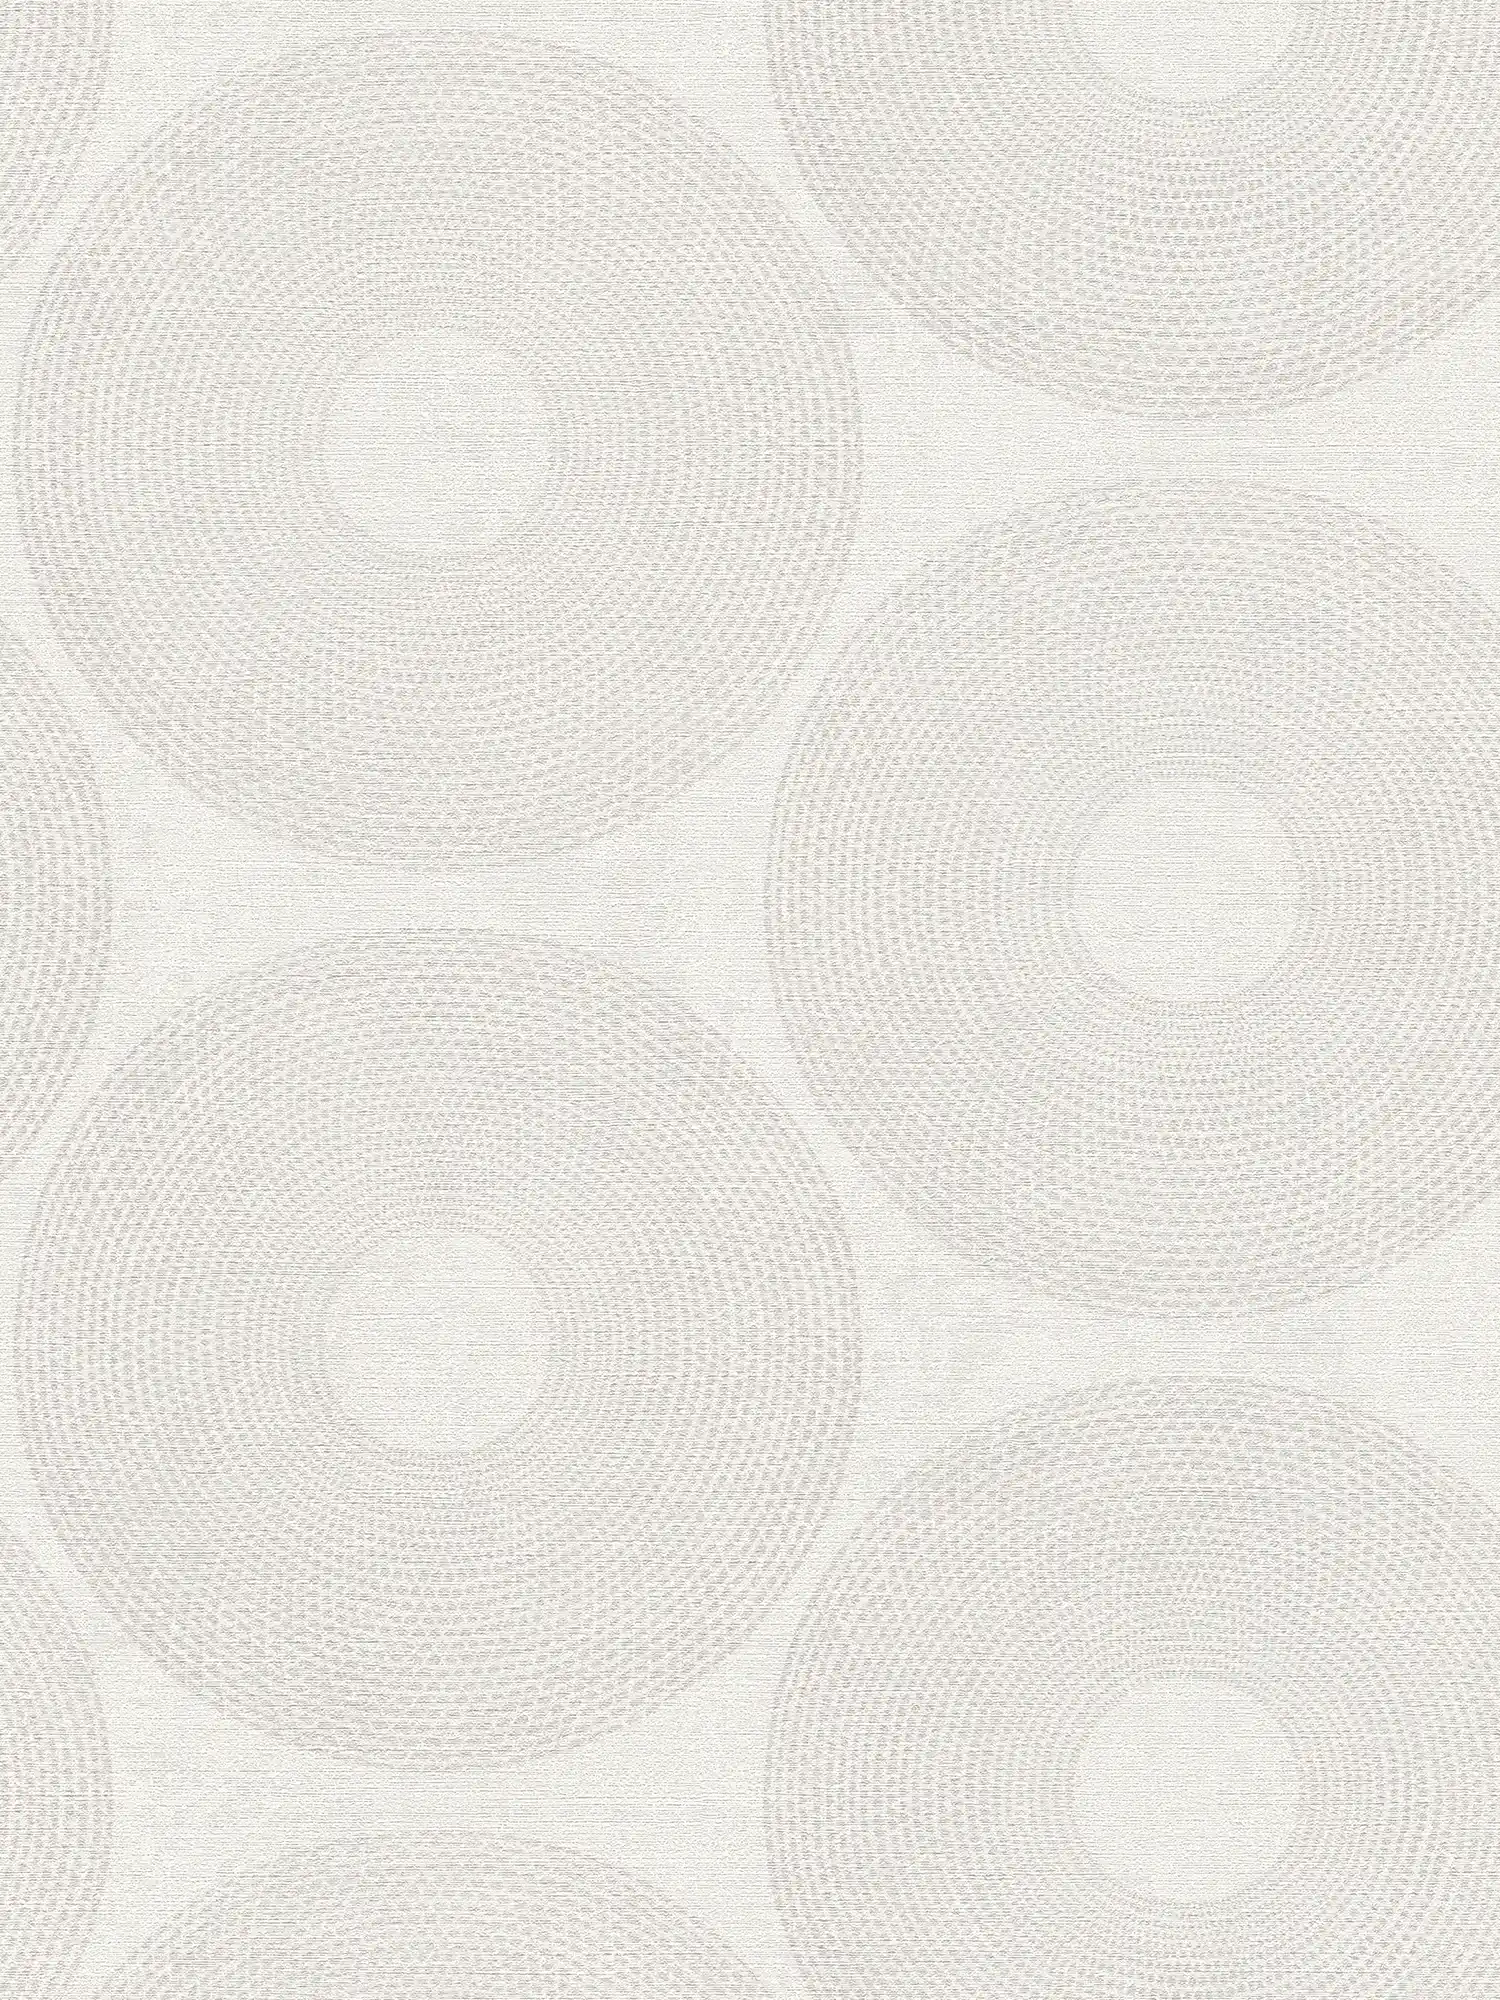         Ethno Tapete Kreise mit Strukturdesign – Grau
    